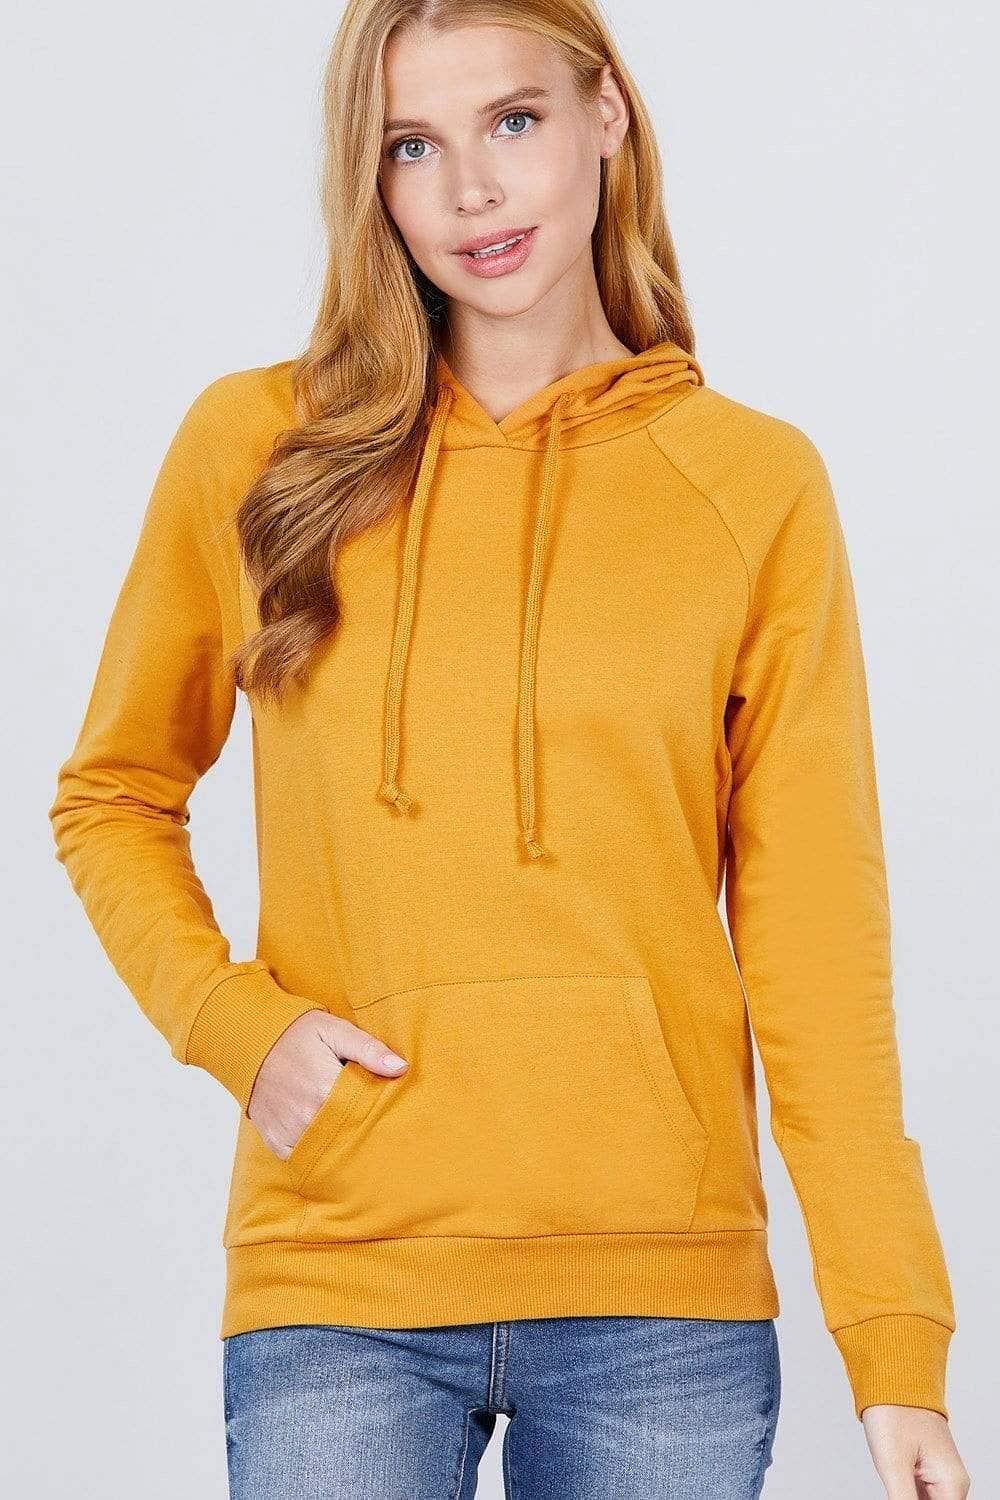 Mustard French Terry Long Sleeve Sweatshirt - Shopping Therapy S Sweatshirt